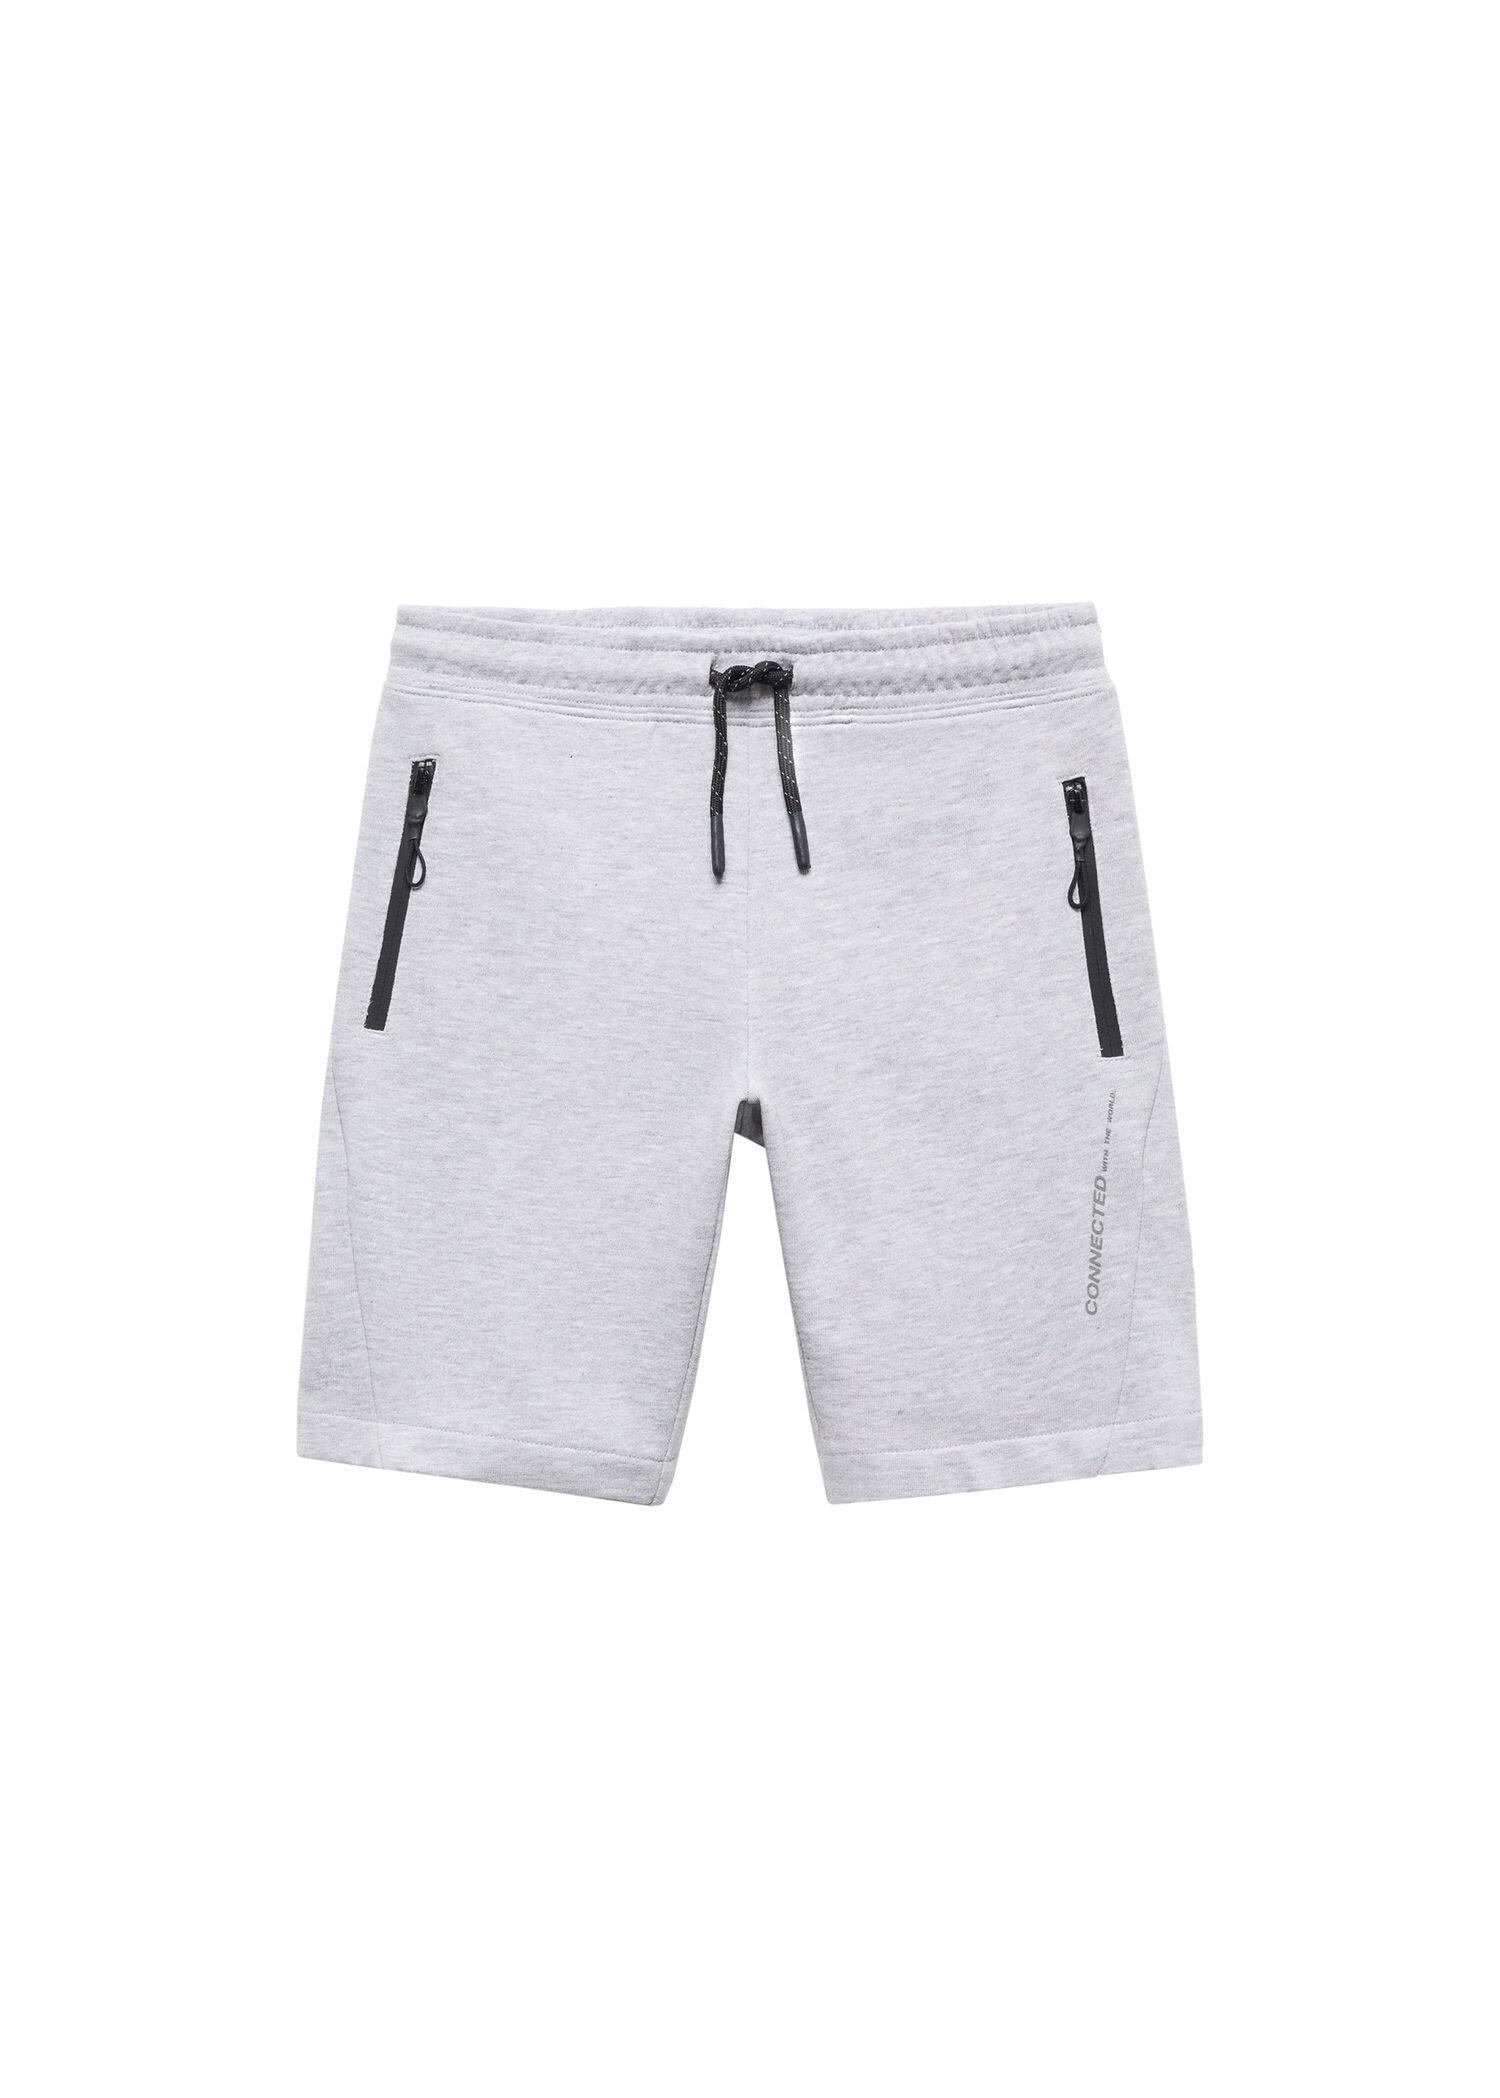 Mango - Grey Elastic Waist Bermuda Shorts, Kids Boys